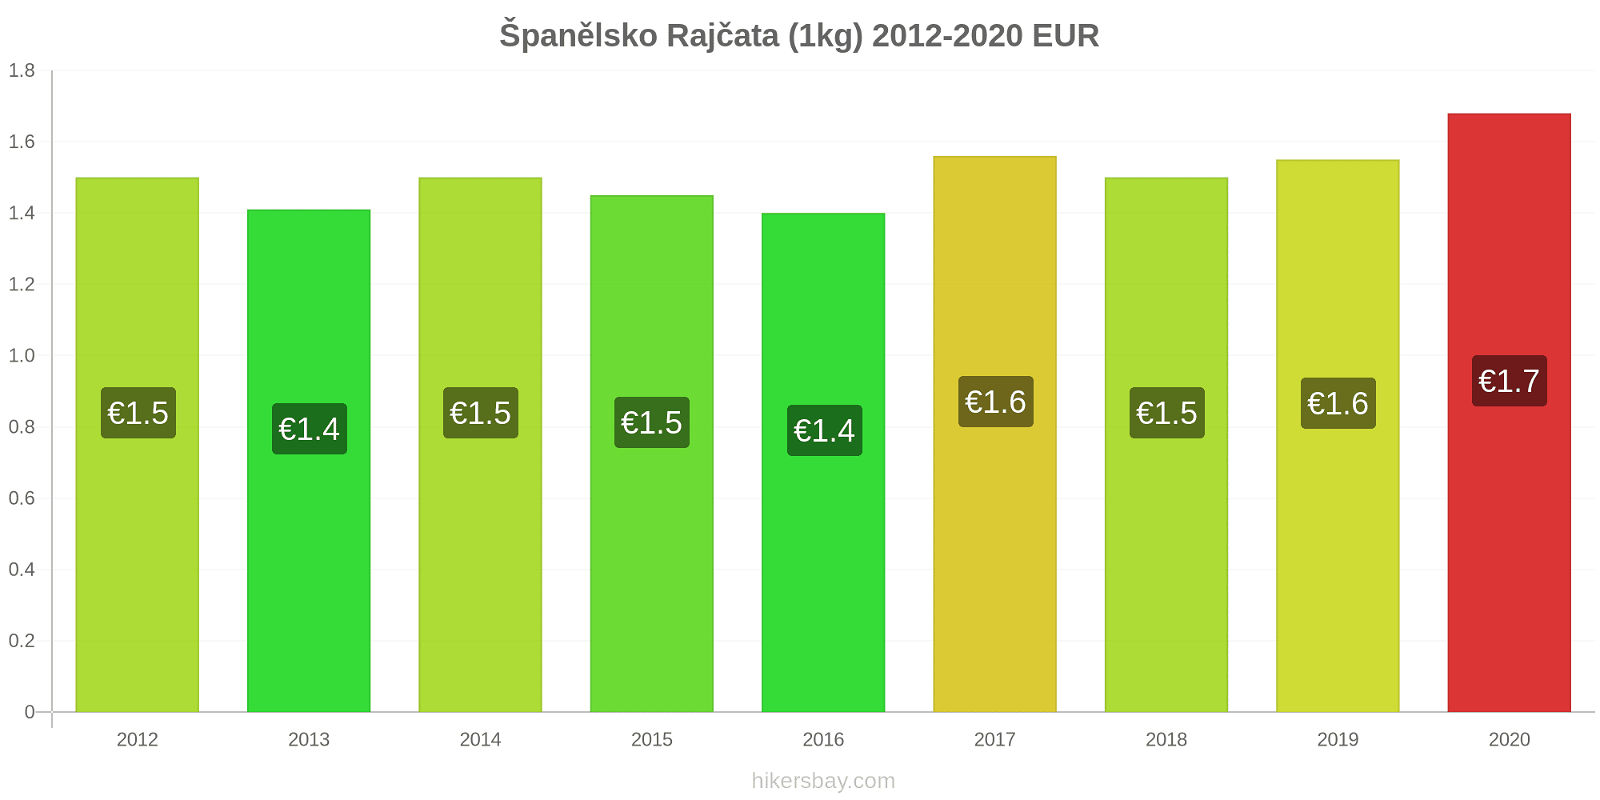 Španělsko změny cen Rajčata (1kg) hikersbay.com